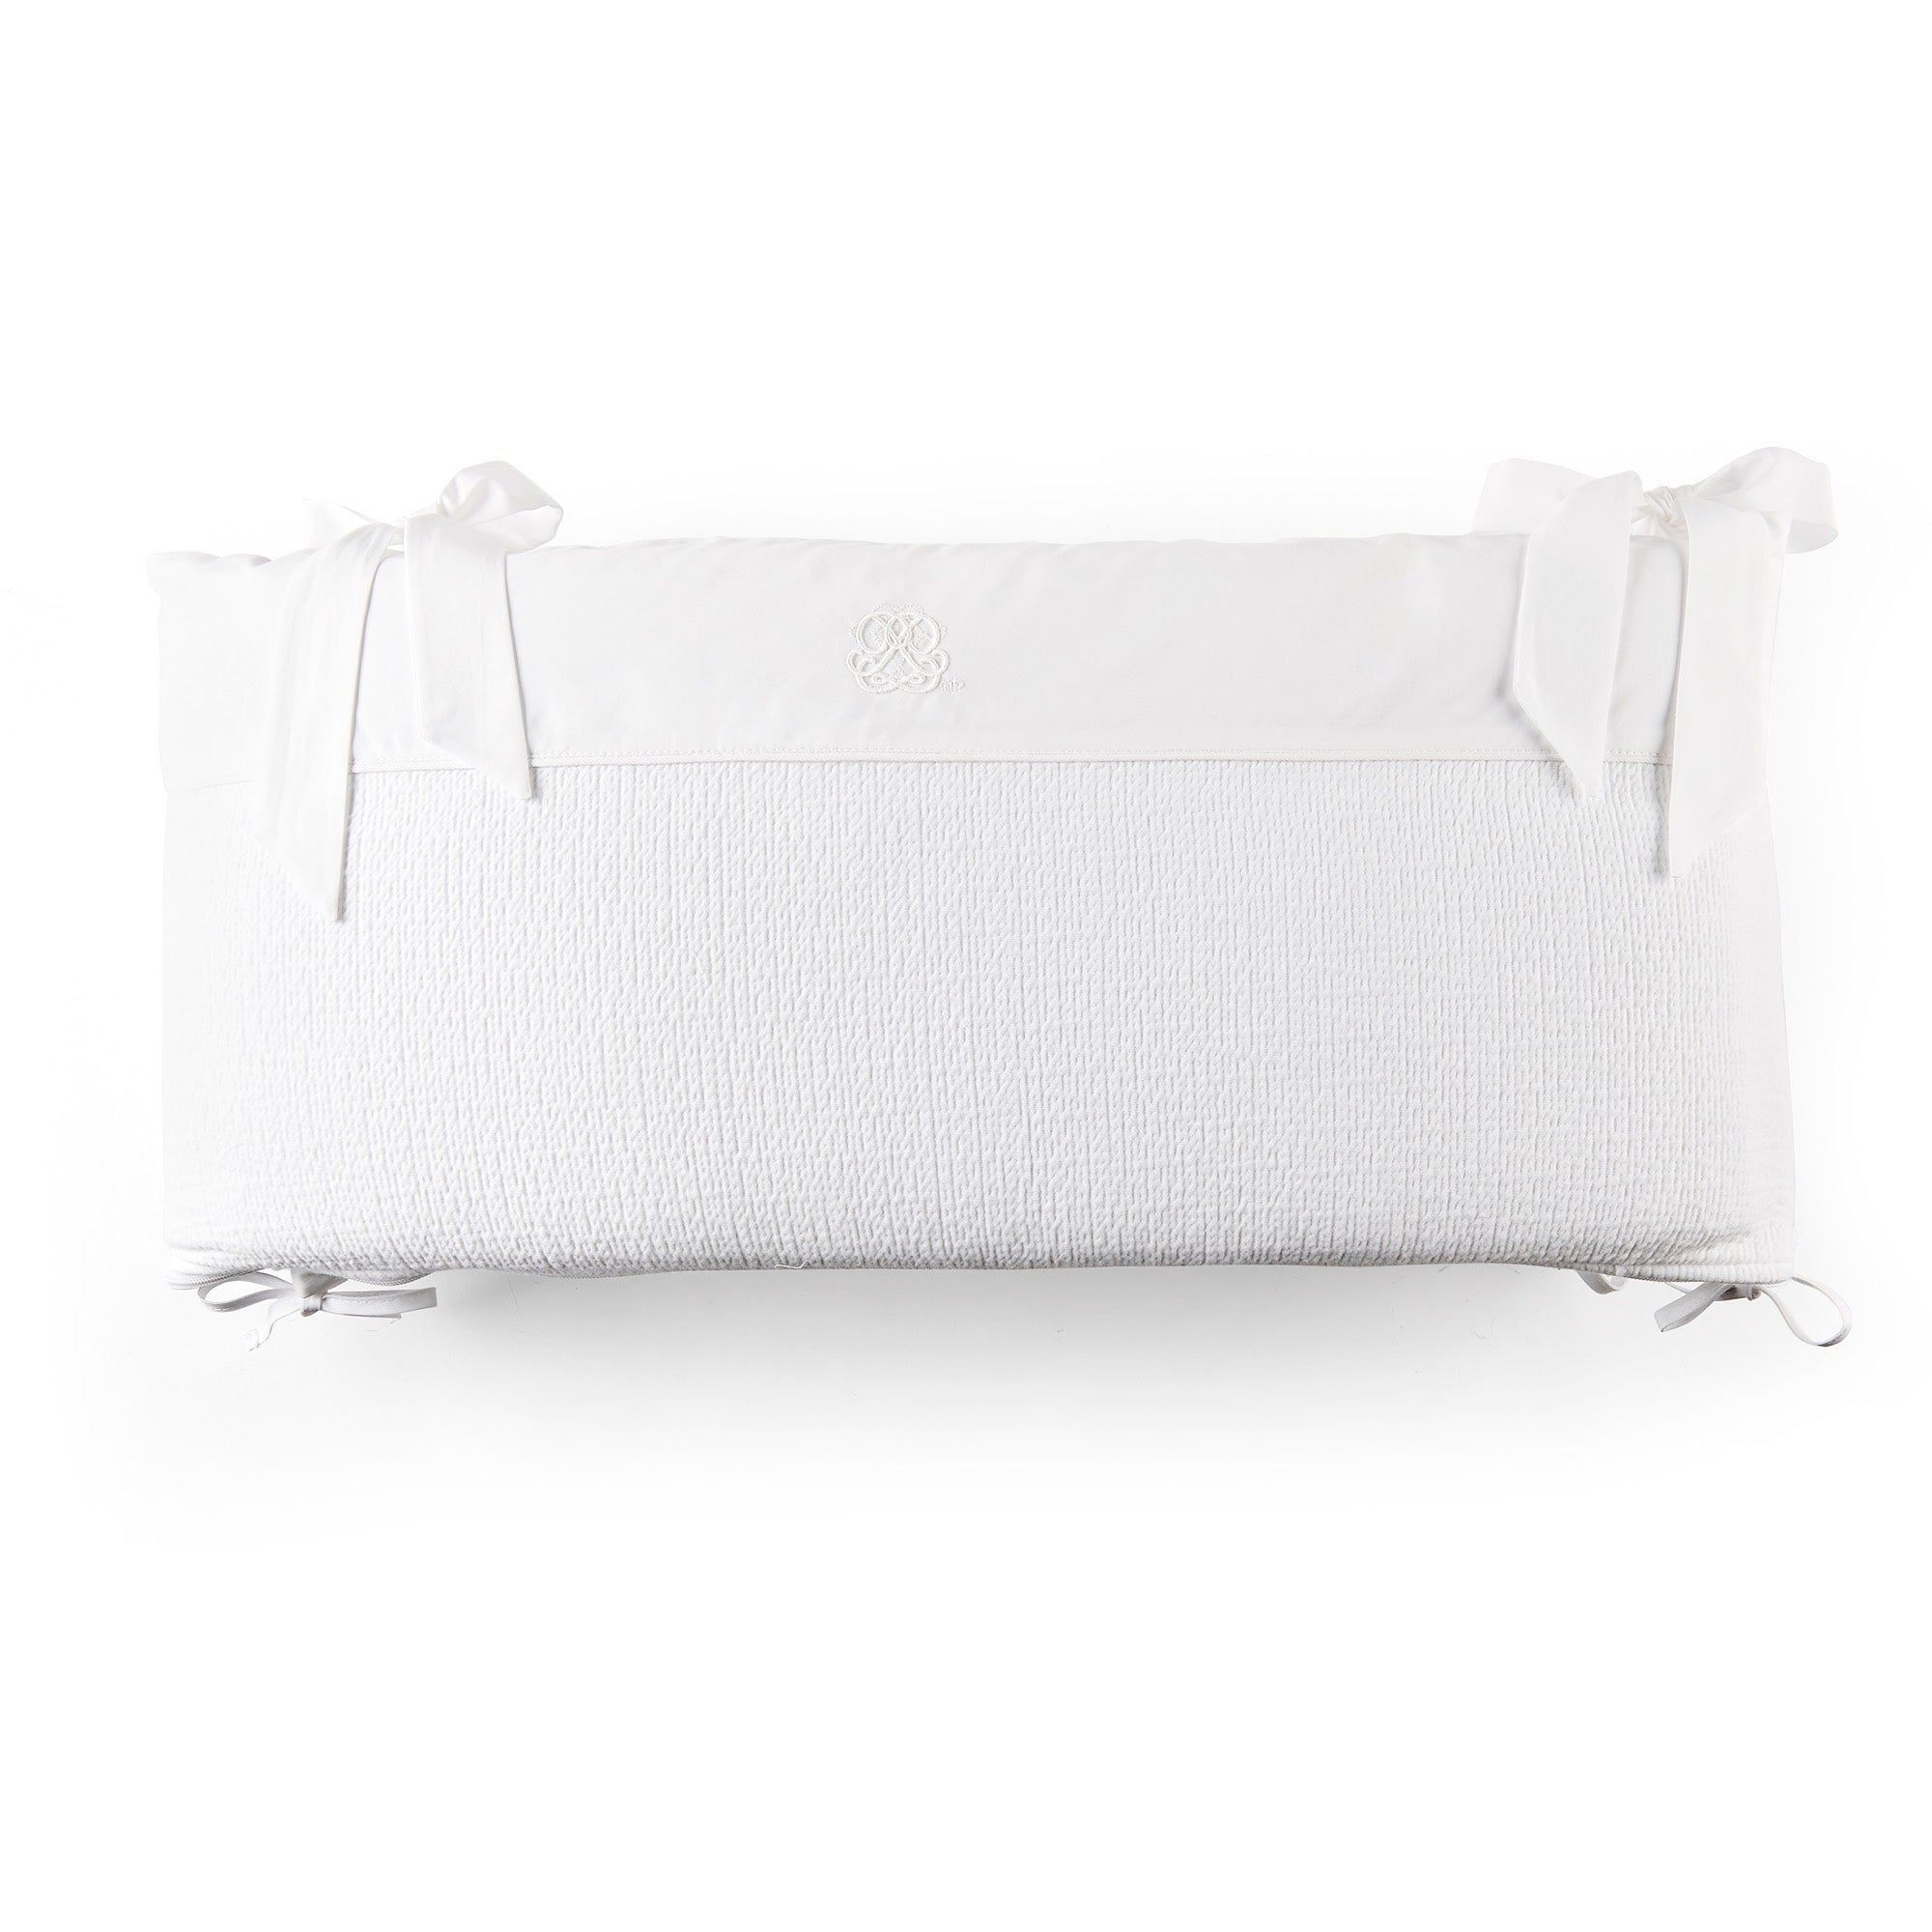 Theophile & Patachou 60 cm Bed Bumper - Cotton White